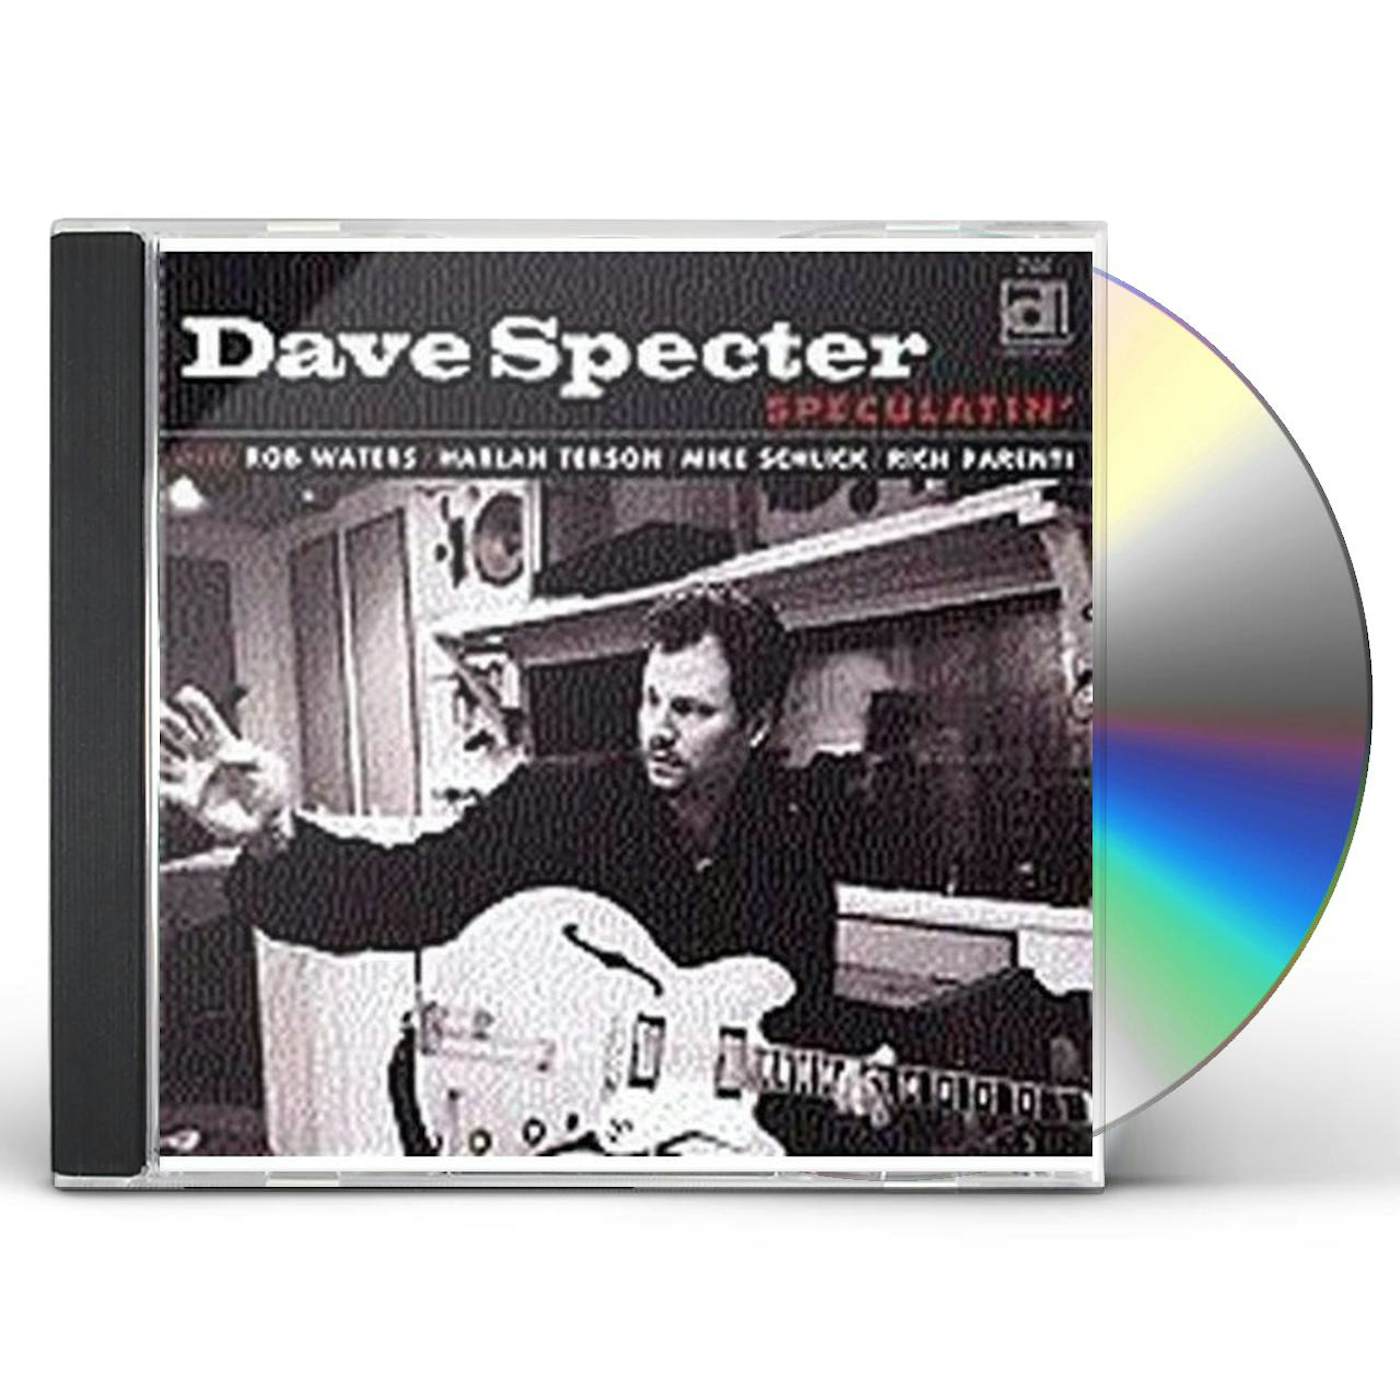 Dave Specter SPECULATIN CD